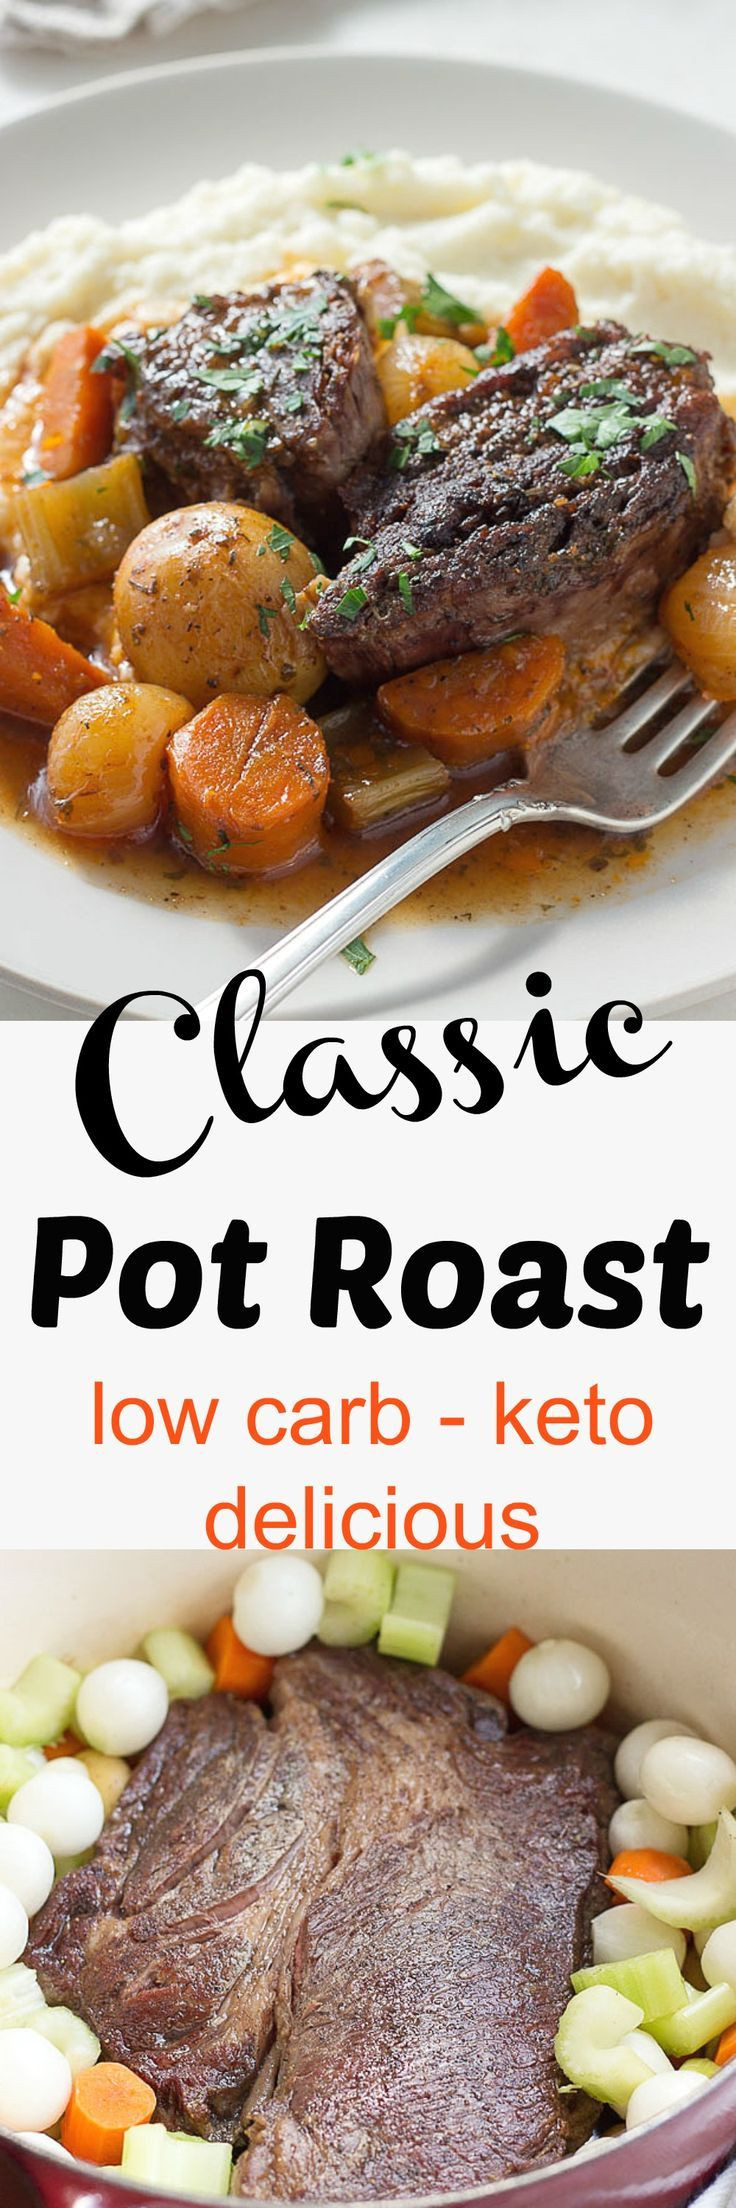 Low Carb Vegetables Recipes
 Best 25 Low carb ve ables ideas on Pinterest